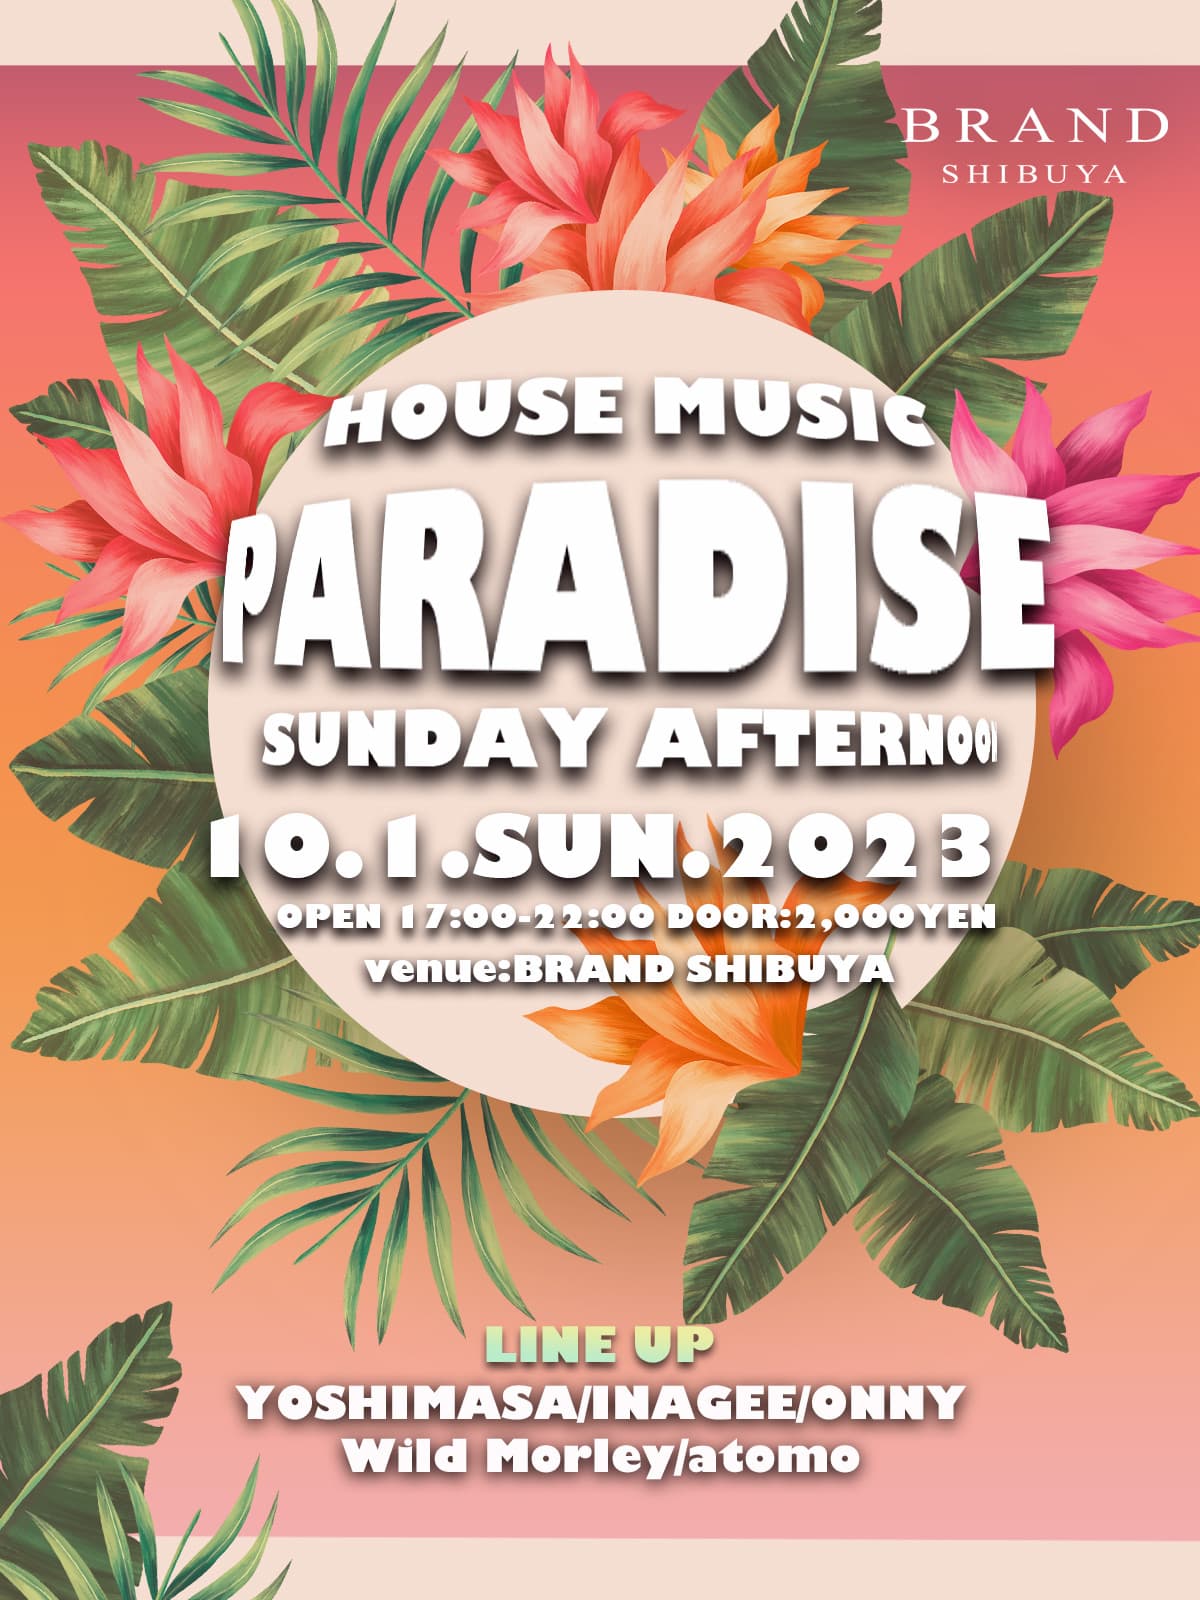 HOUSE MUSIC PARADISE SUNDAY AFTERNOON